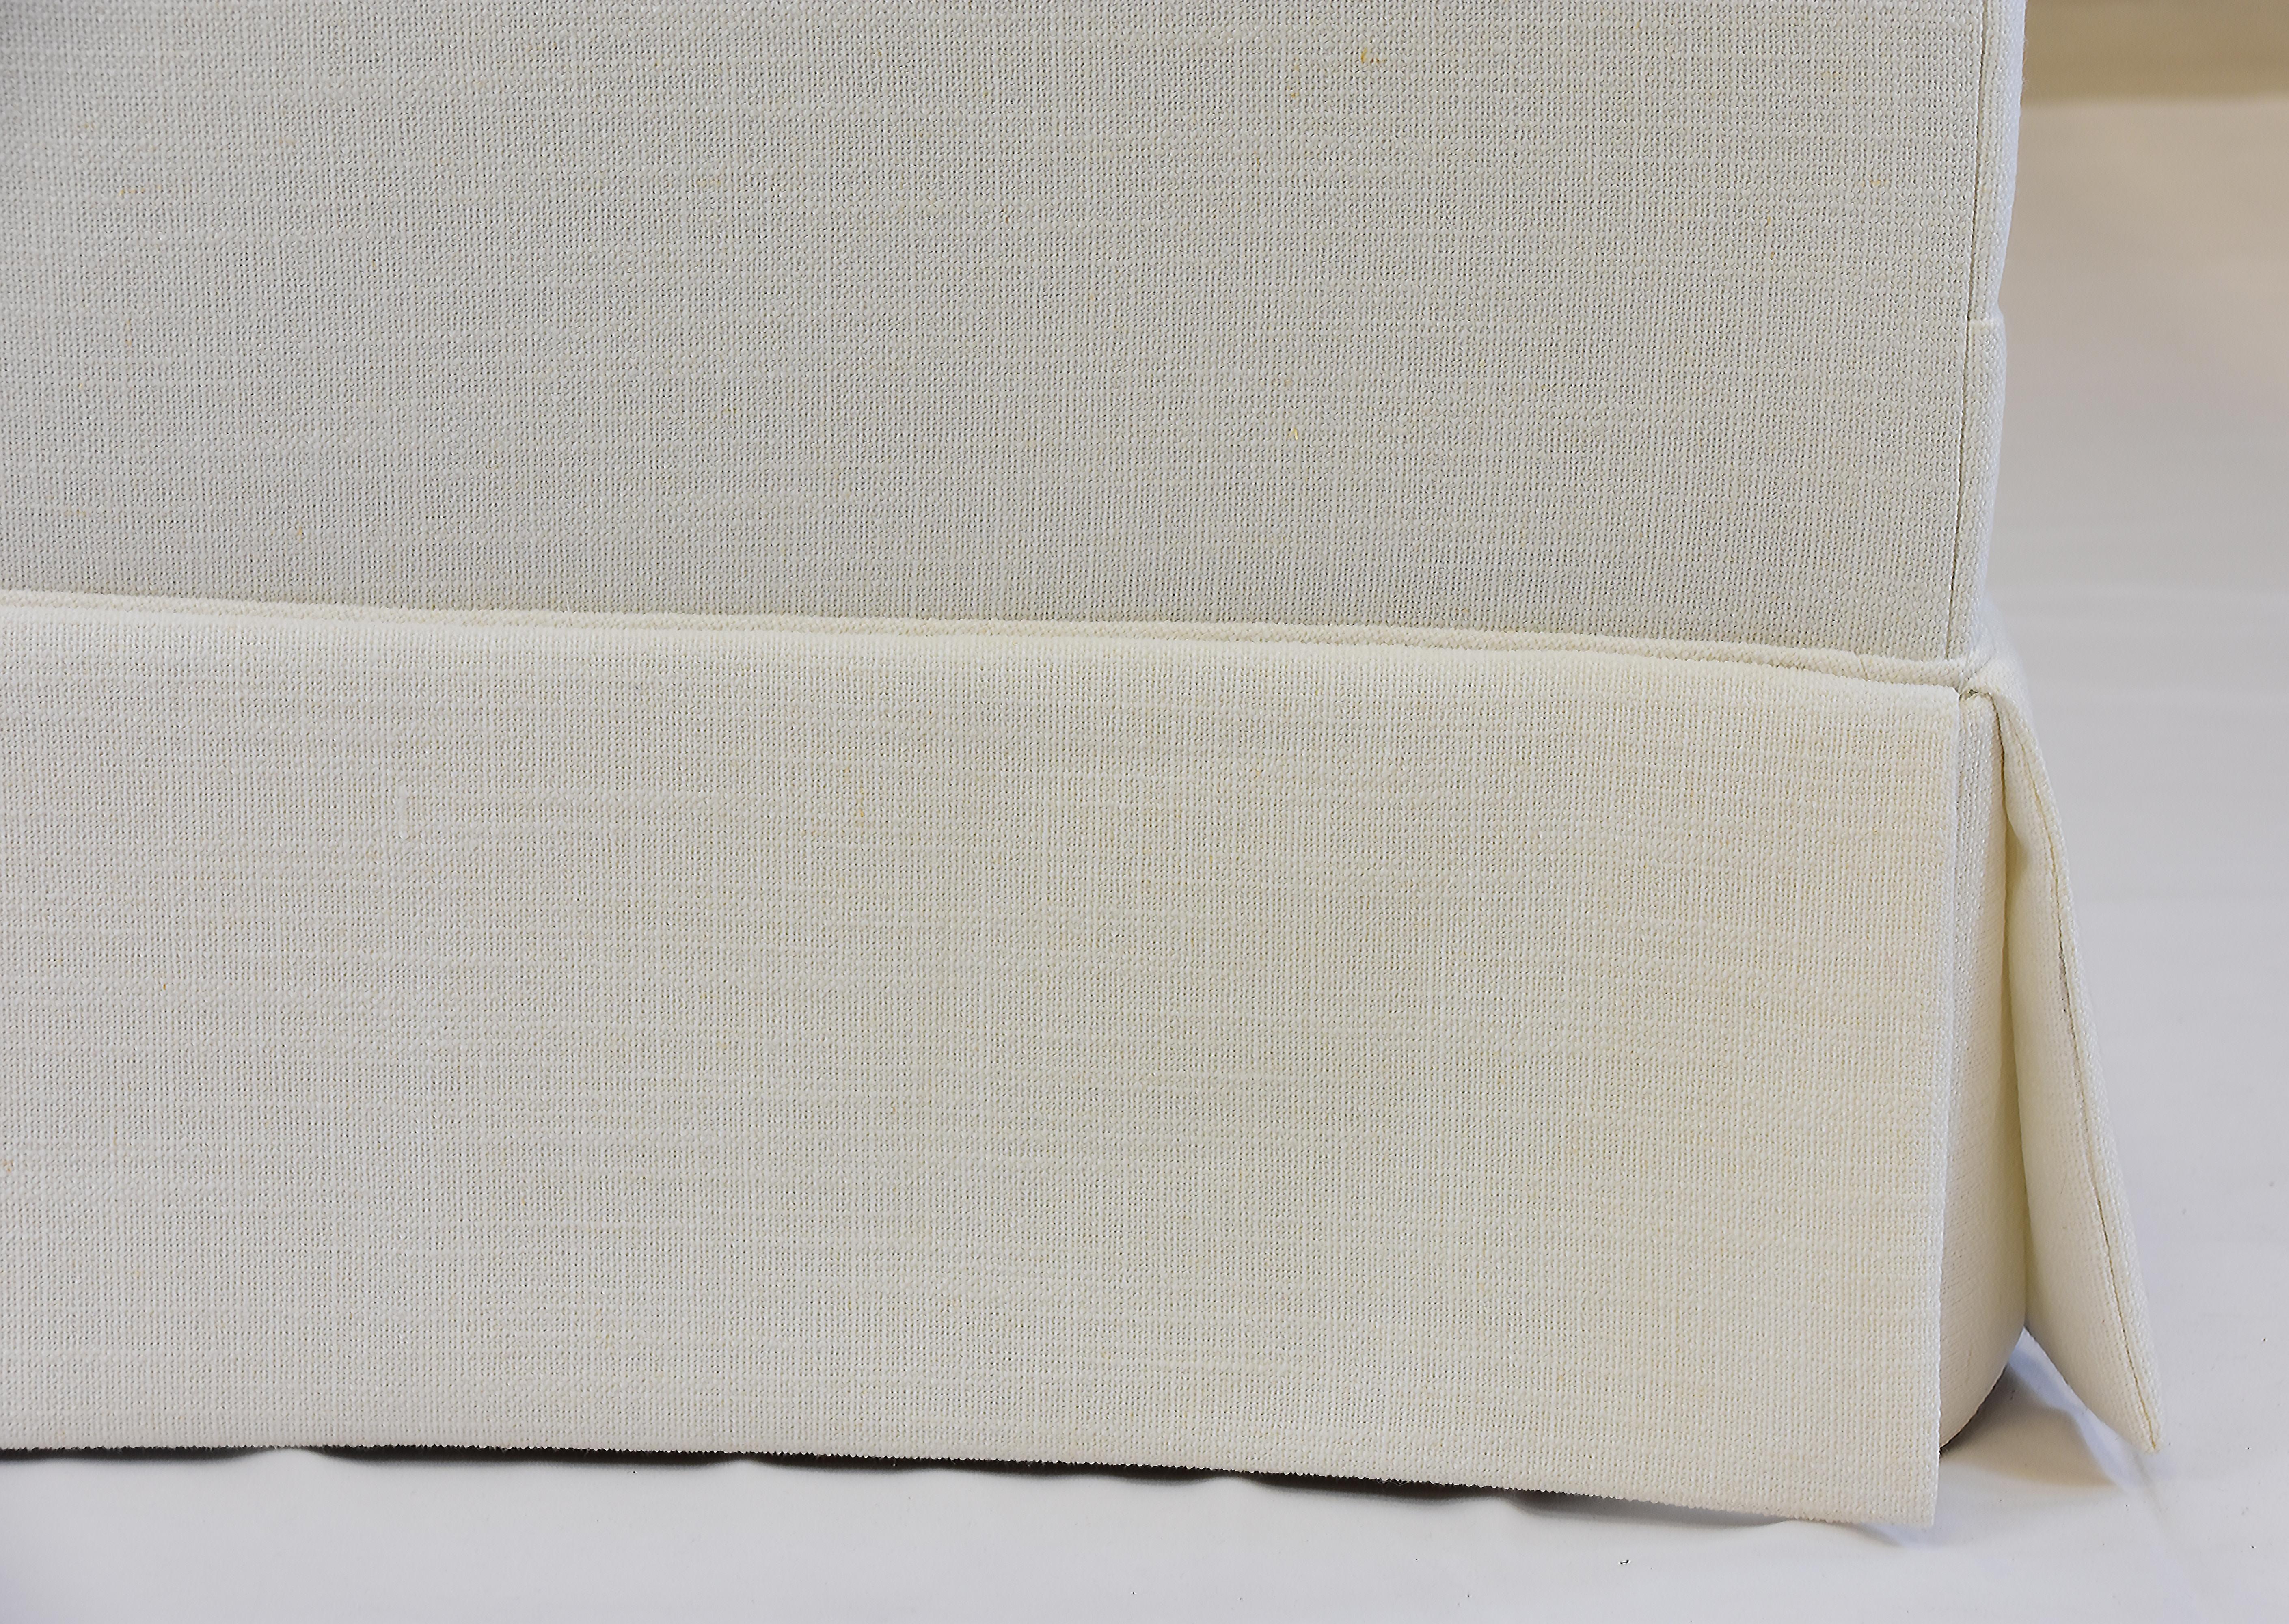 Le Jeune Upholstery Lucca Sofa Showroom Model in White Linen 7